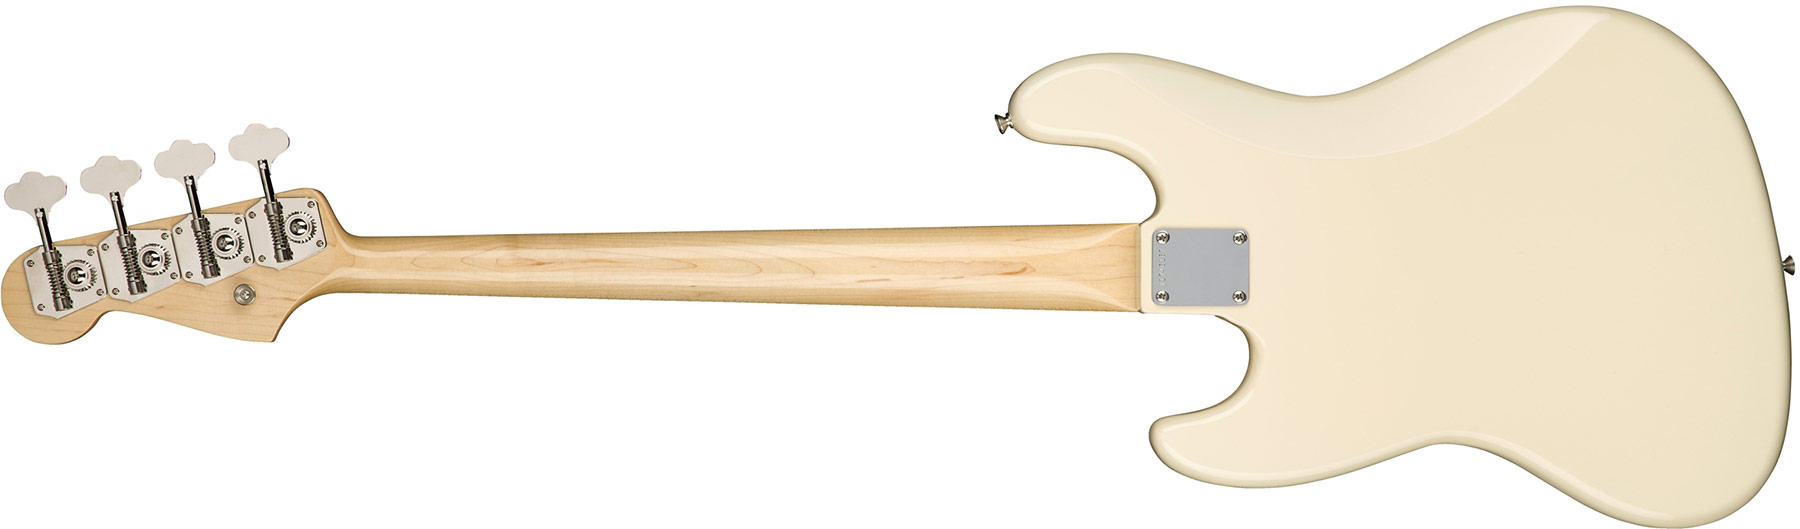 Fender Jazz Bass '60s American Original Usa Rw - Olympic White - Solidbody E-bass - Variation 2